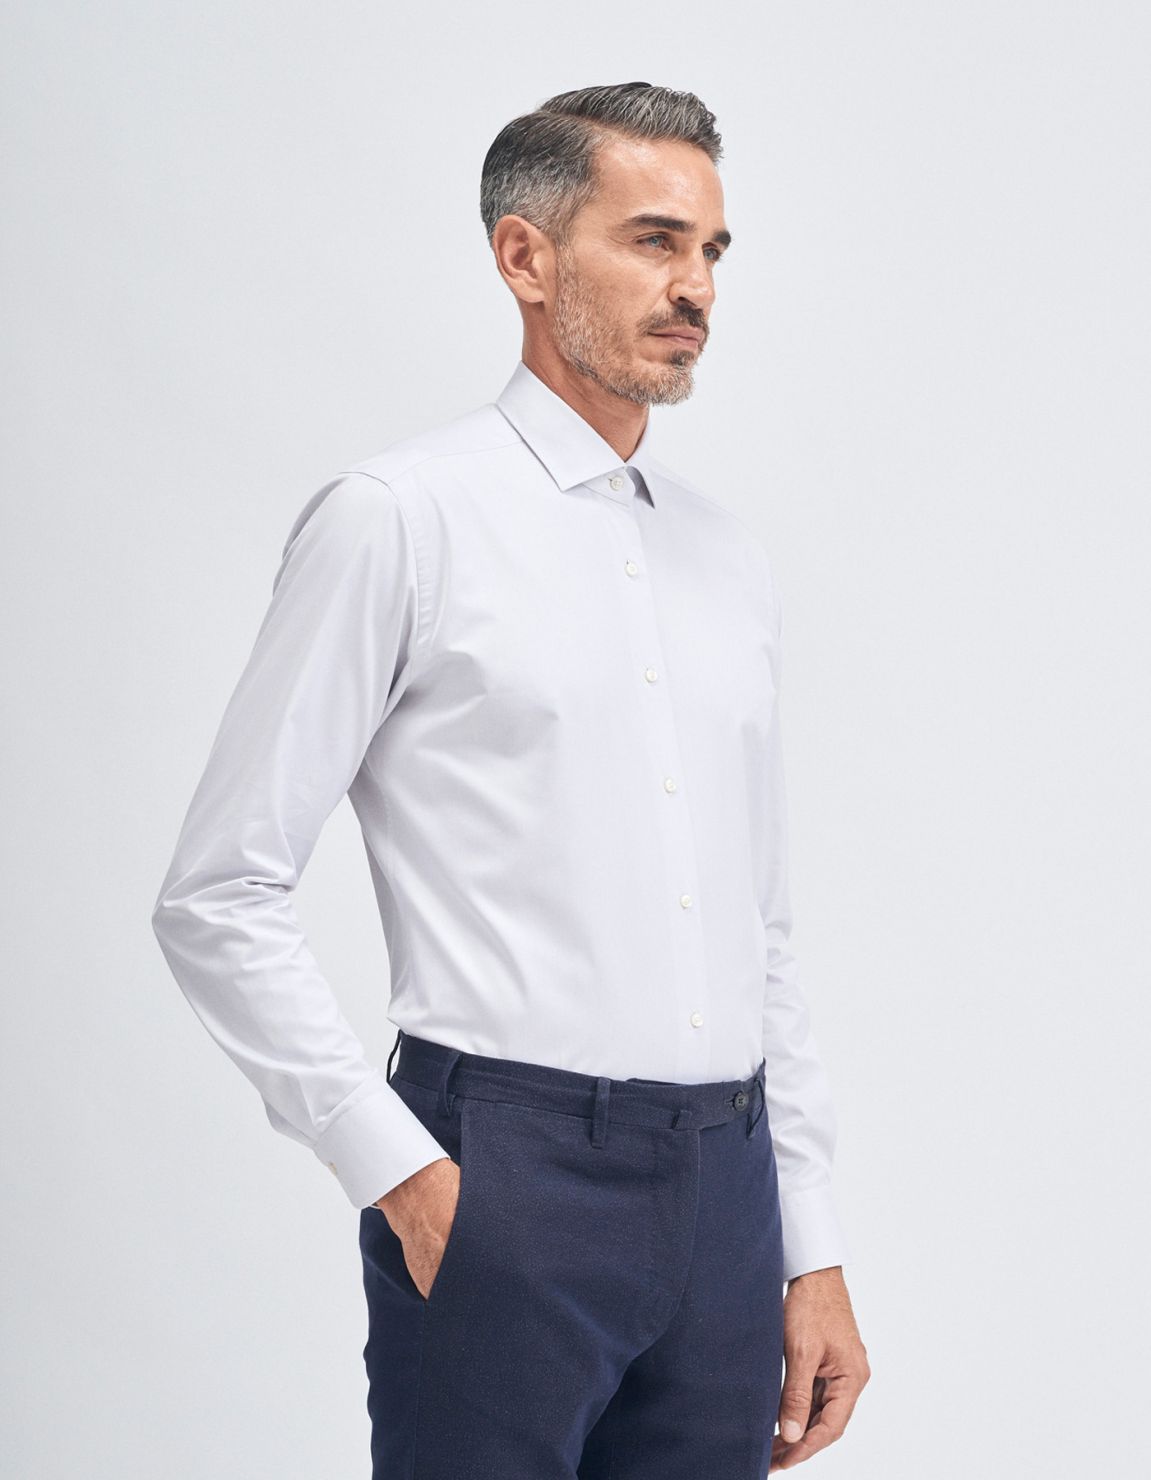 Shirt Collar small cutaway Grey Twill Tailor Custom Fit 1